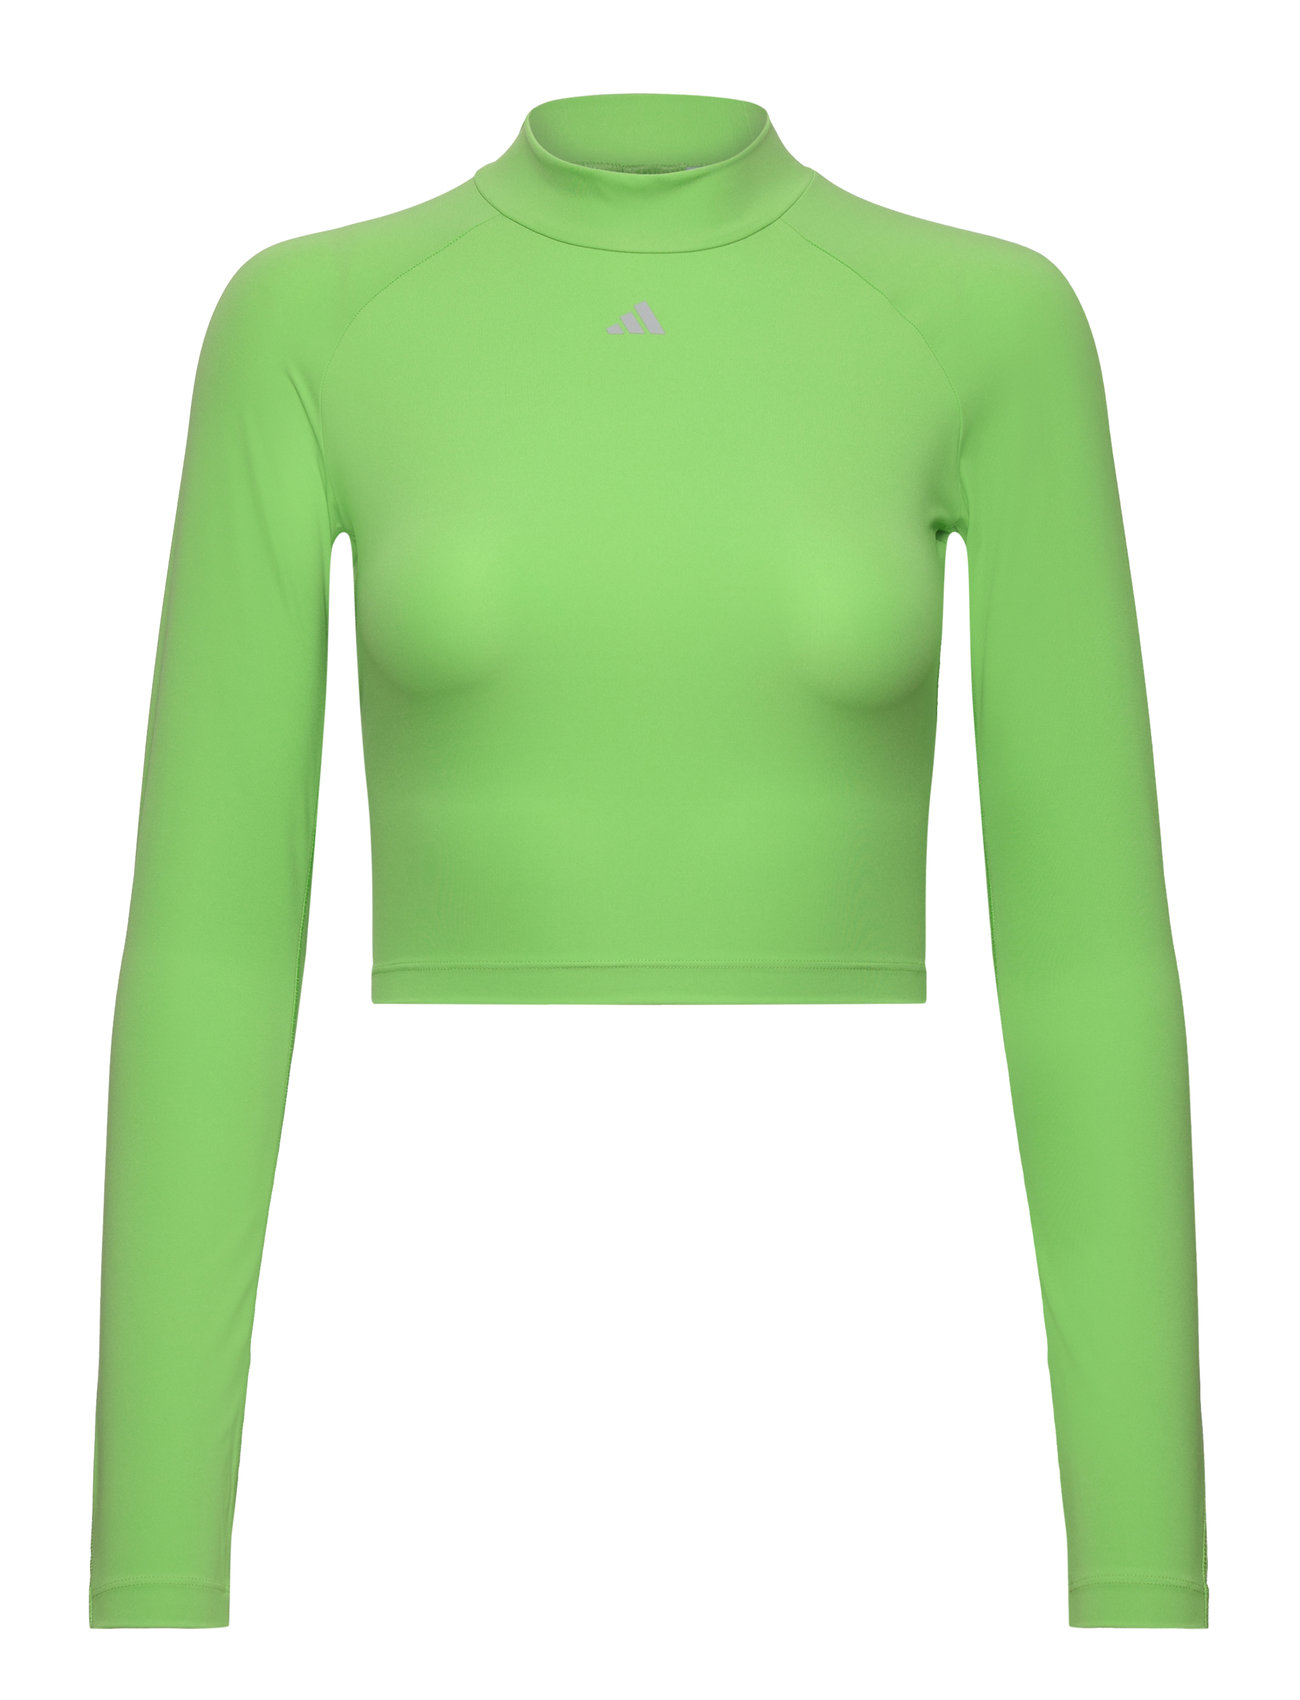 Hiit Hr Ls T Sport Crop Tops Short-sleeved Crop Tops Green Adidas Performance